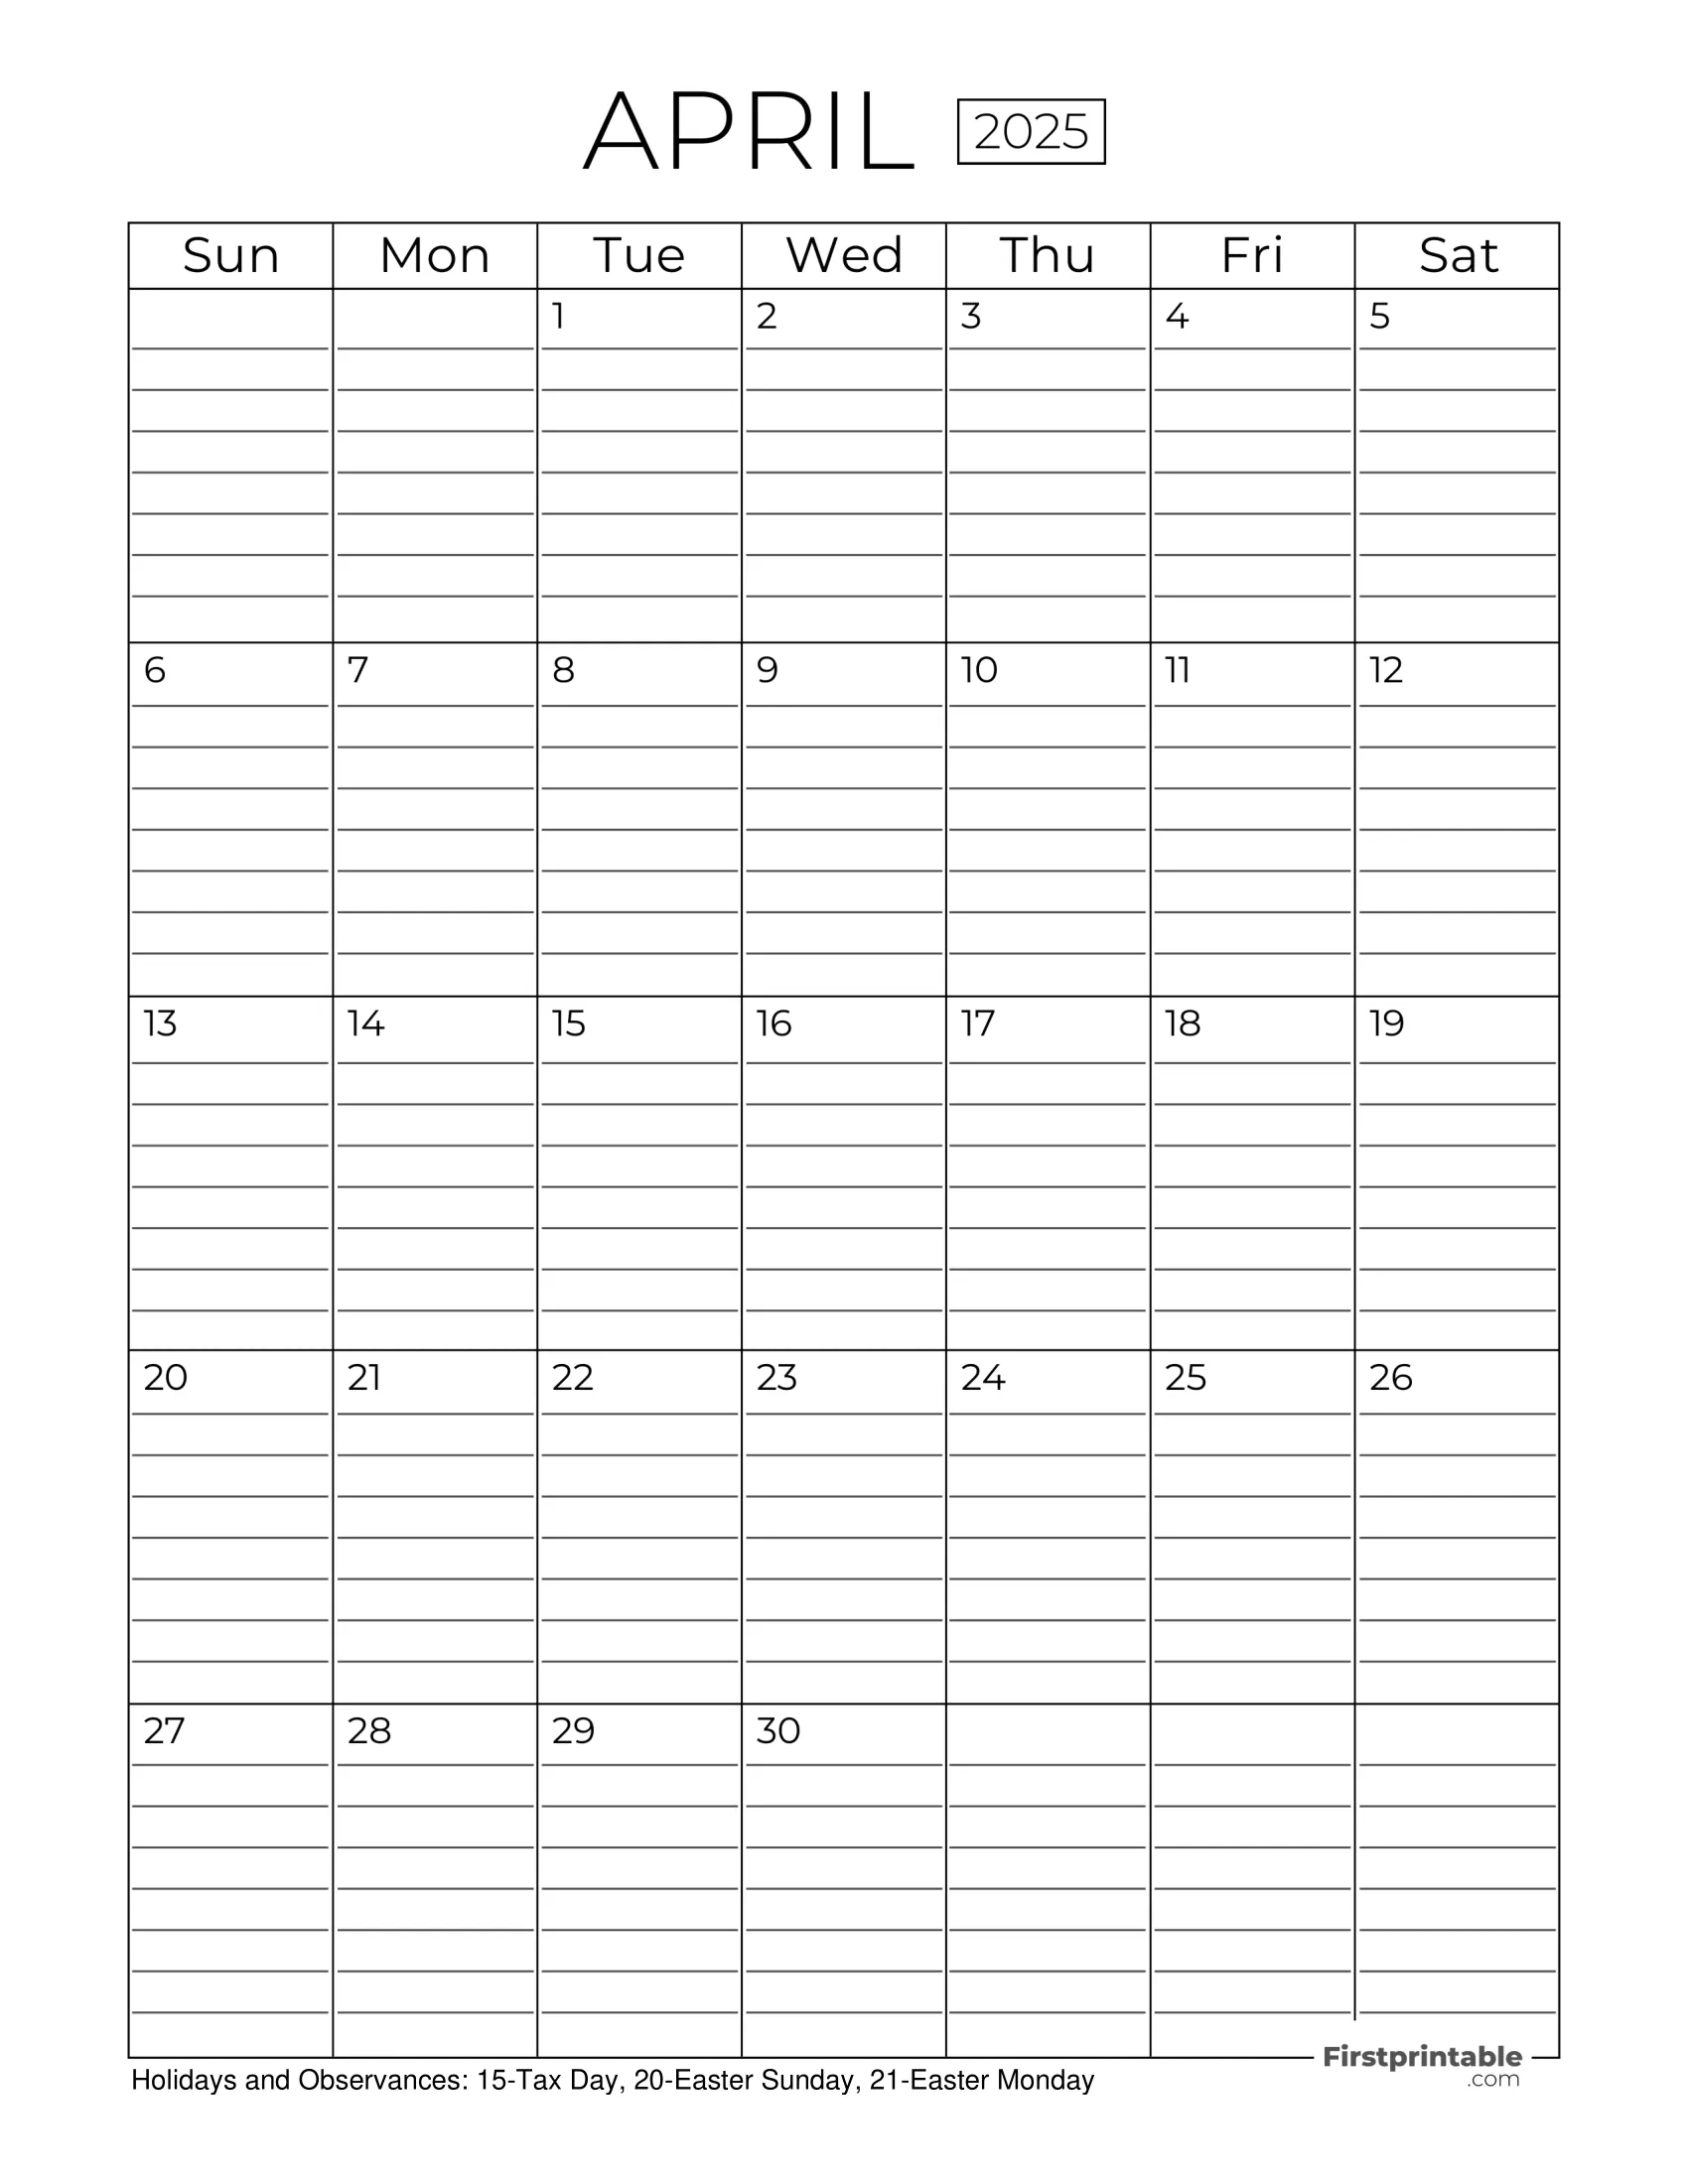 April Calendar 2025 with Lines